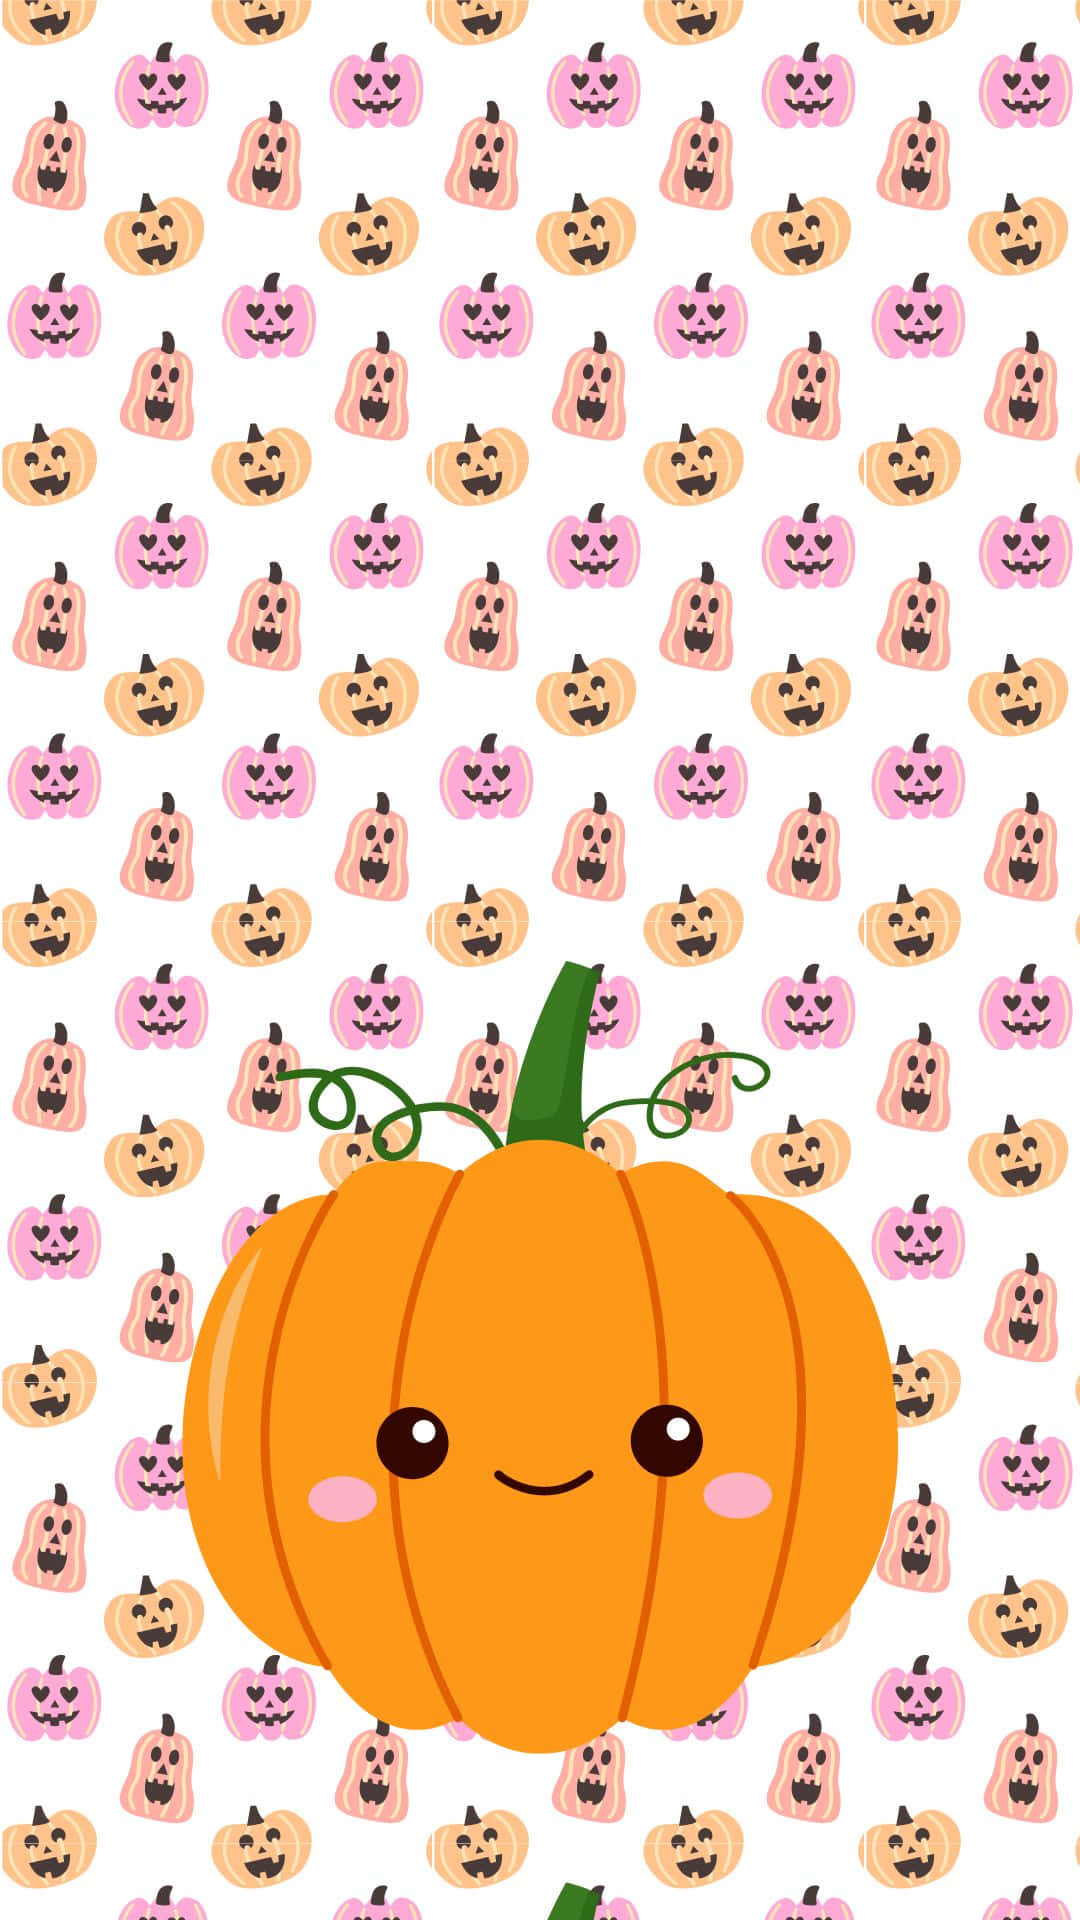 A Cute Pumpkin Smiling in a Warm Autumn Setting Wallpaper